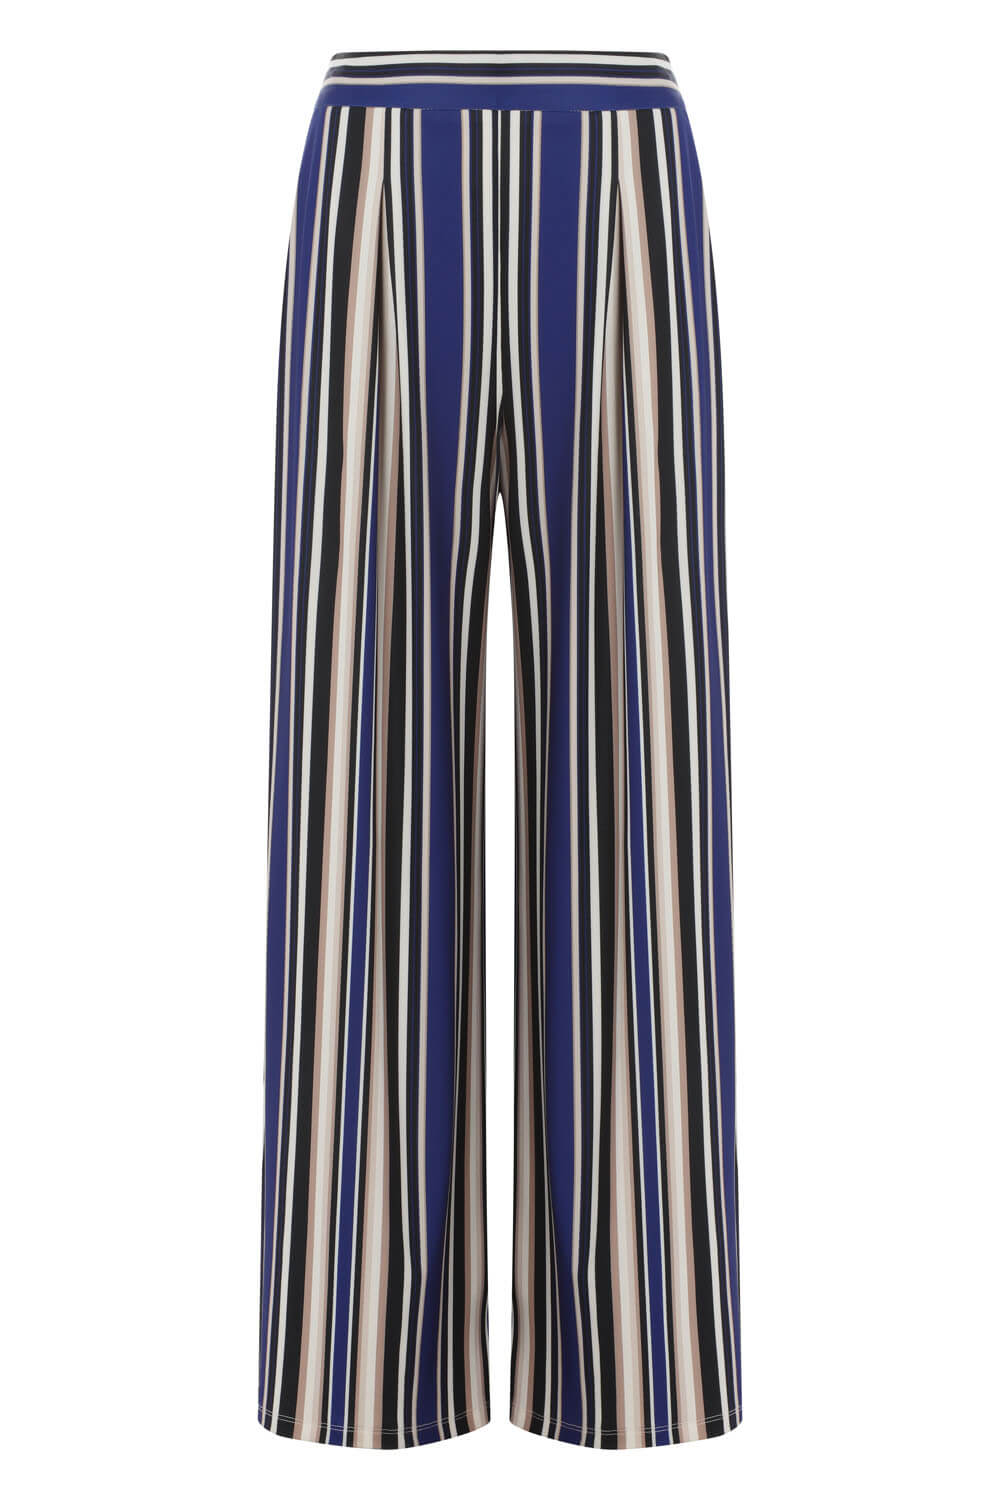 Stripe Ribbed Palazzo Trousers in BLUE - Roman Originals UK